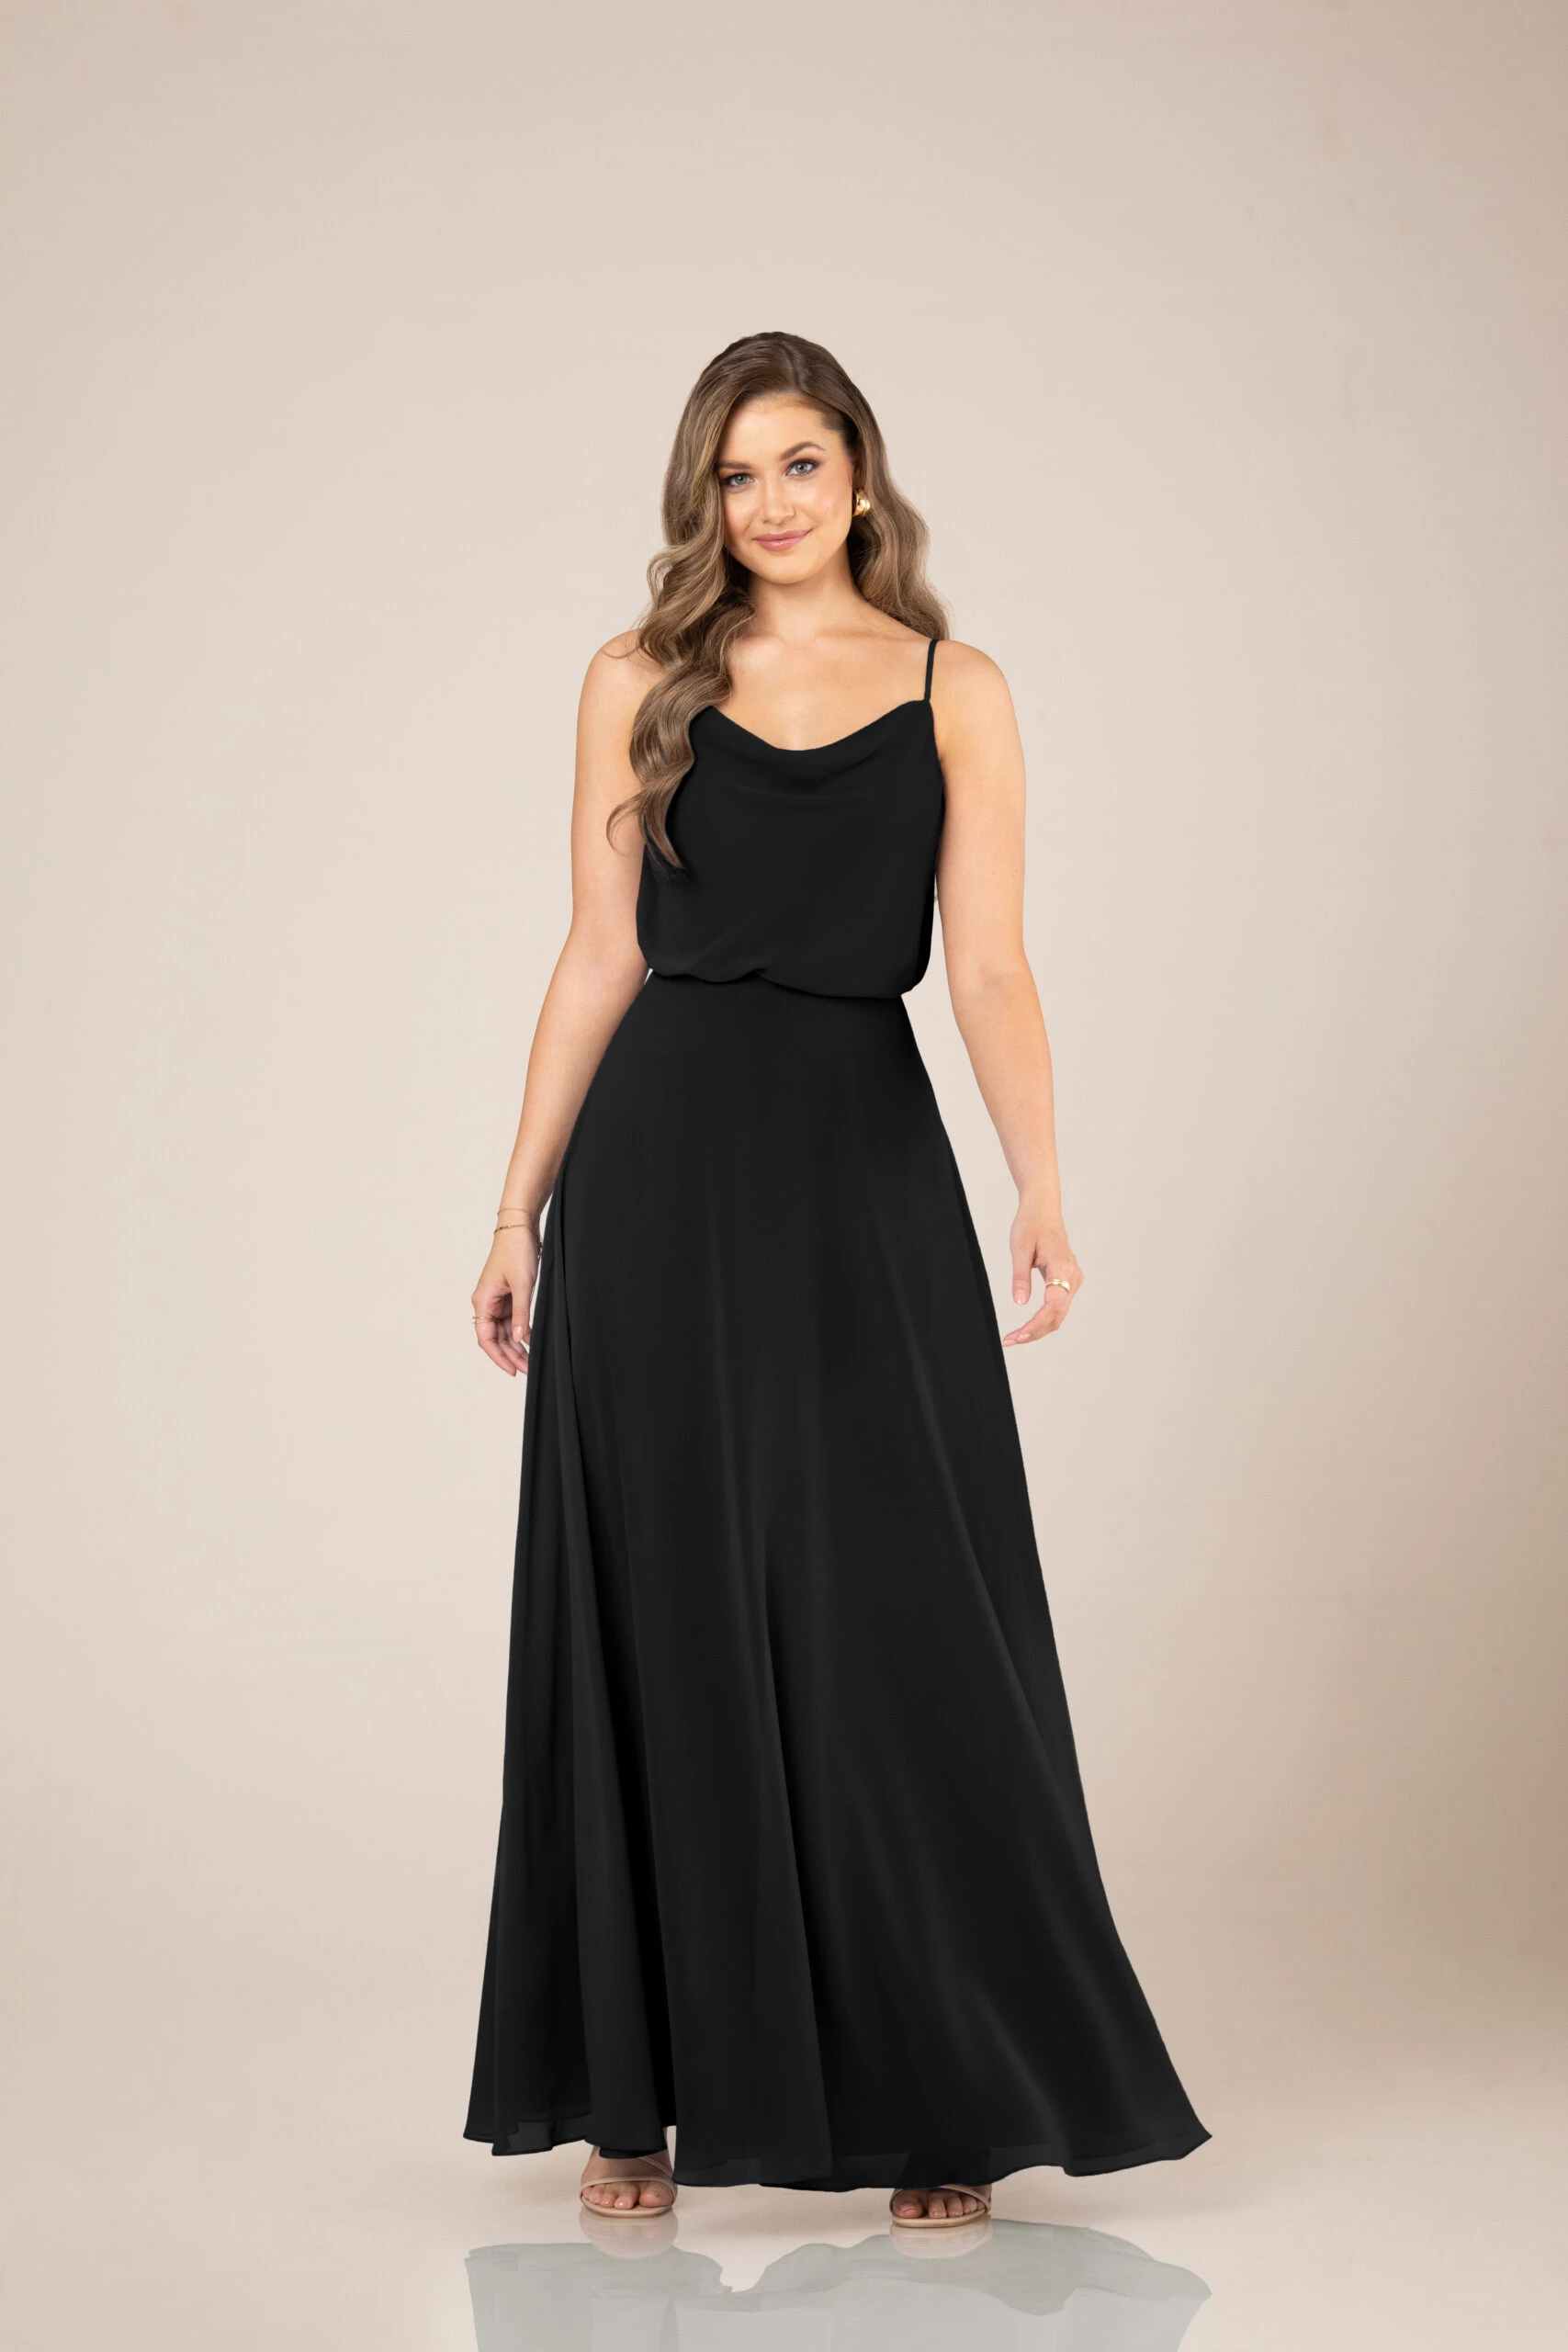 black full length bridesmaid dress with cowl neck - 9504 by Sorella Vita